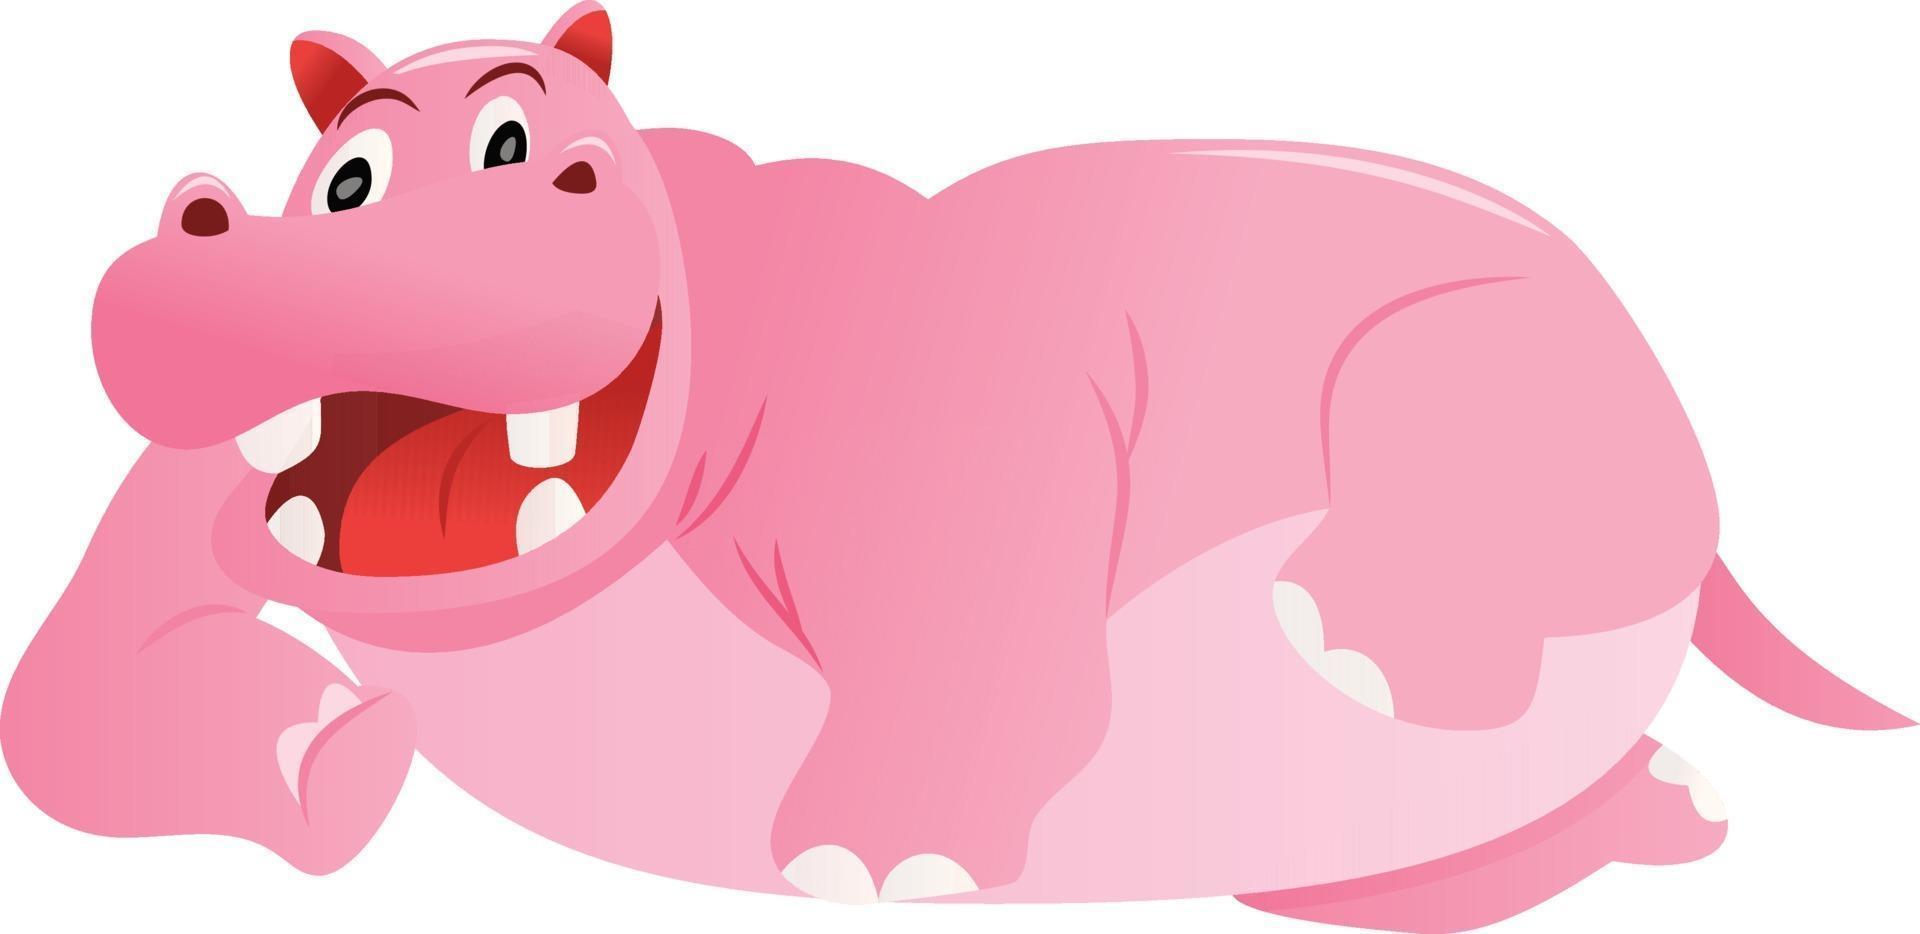 Cartoon Pink Hippo Lying Down vector